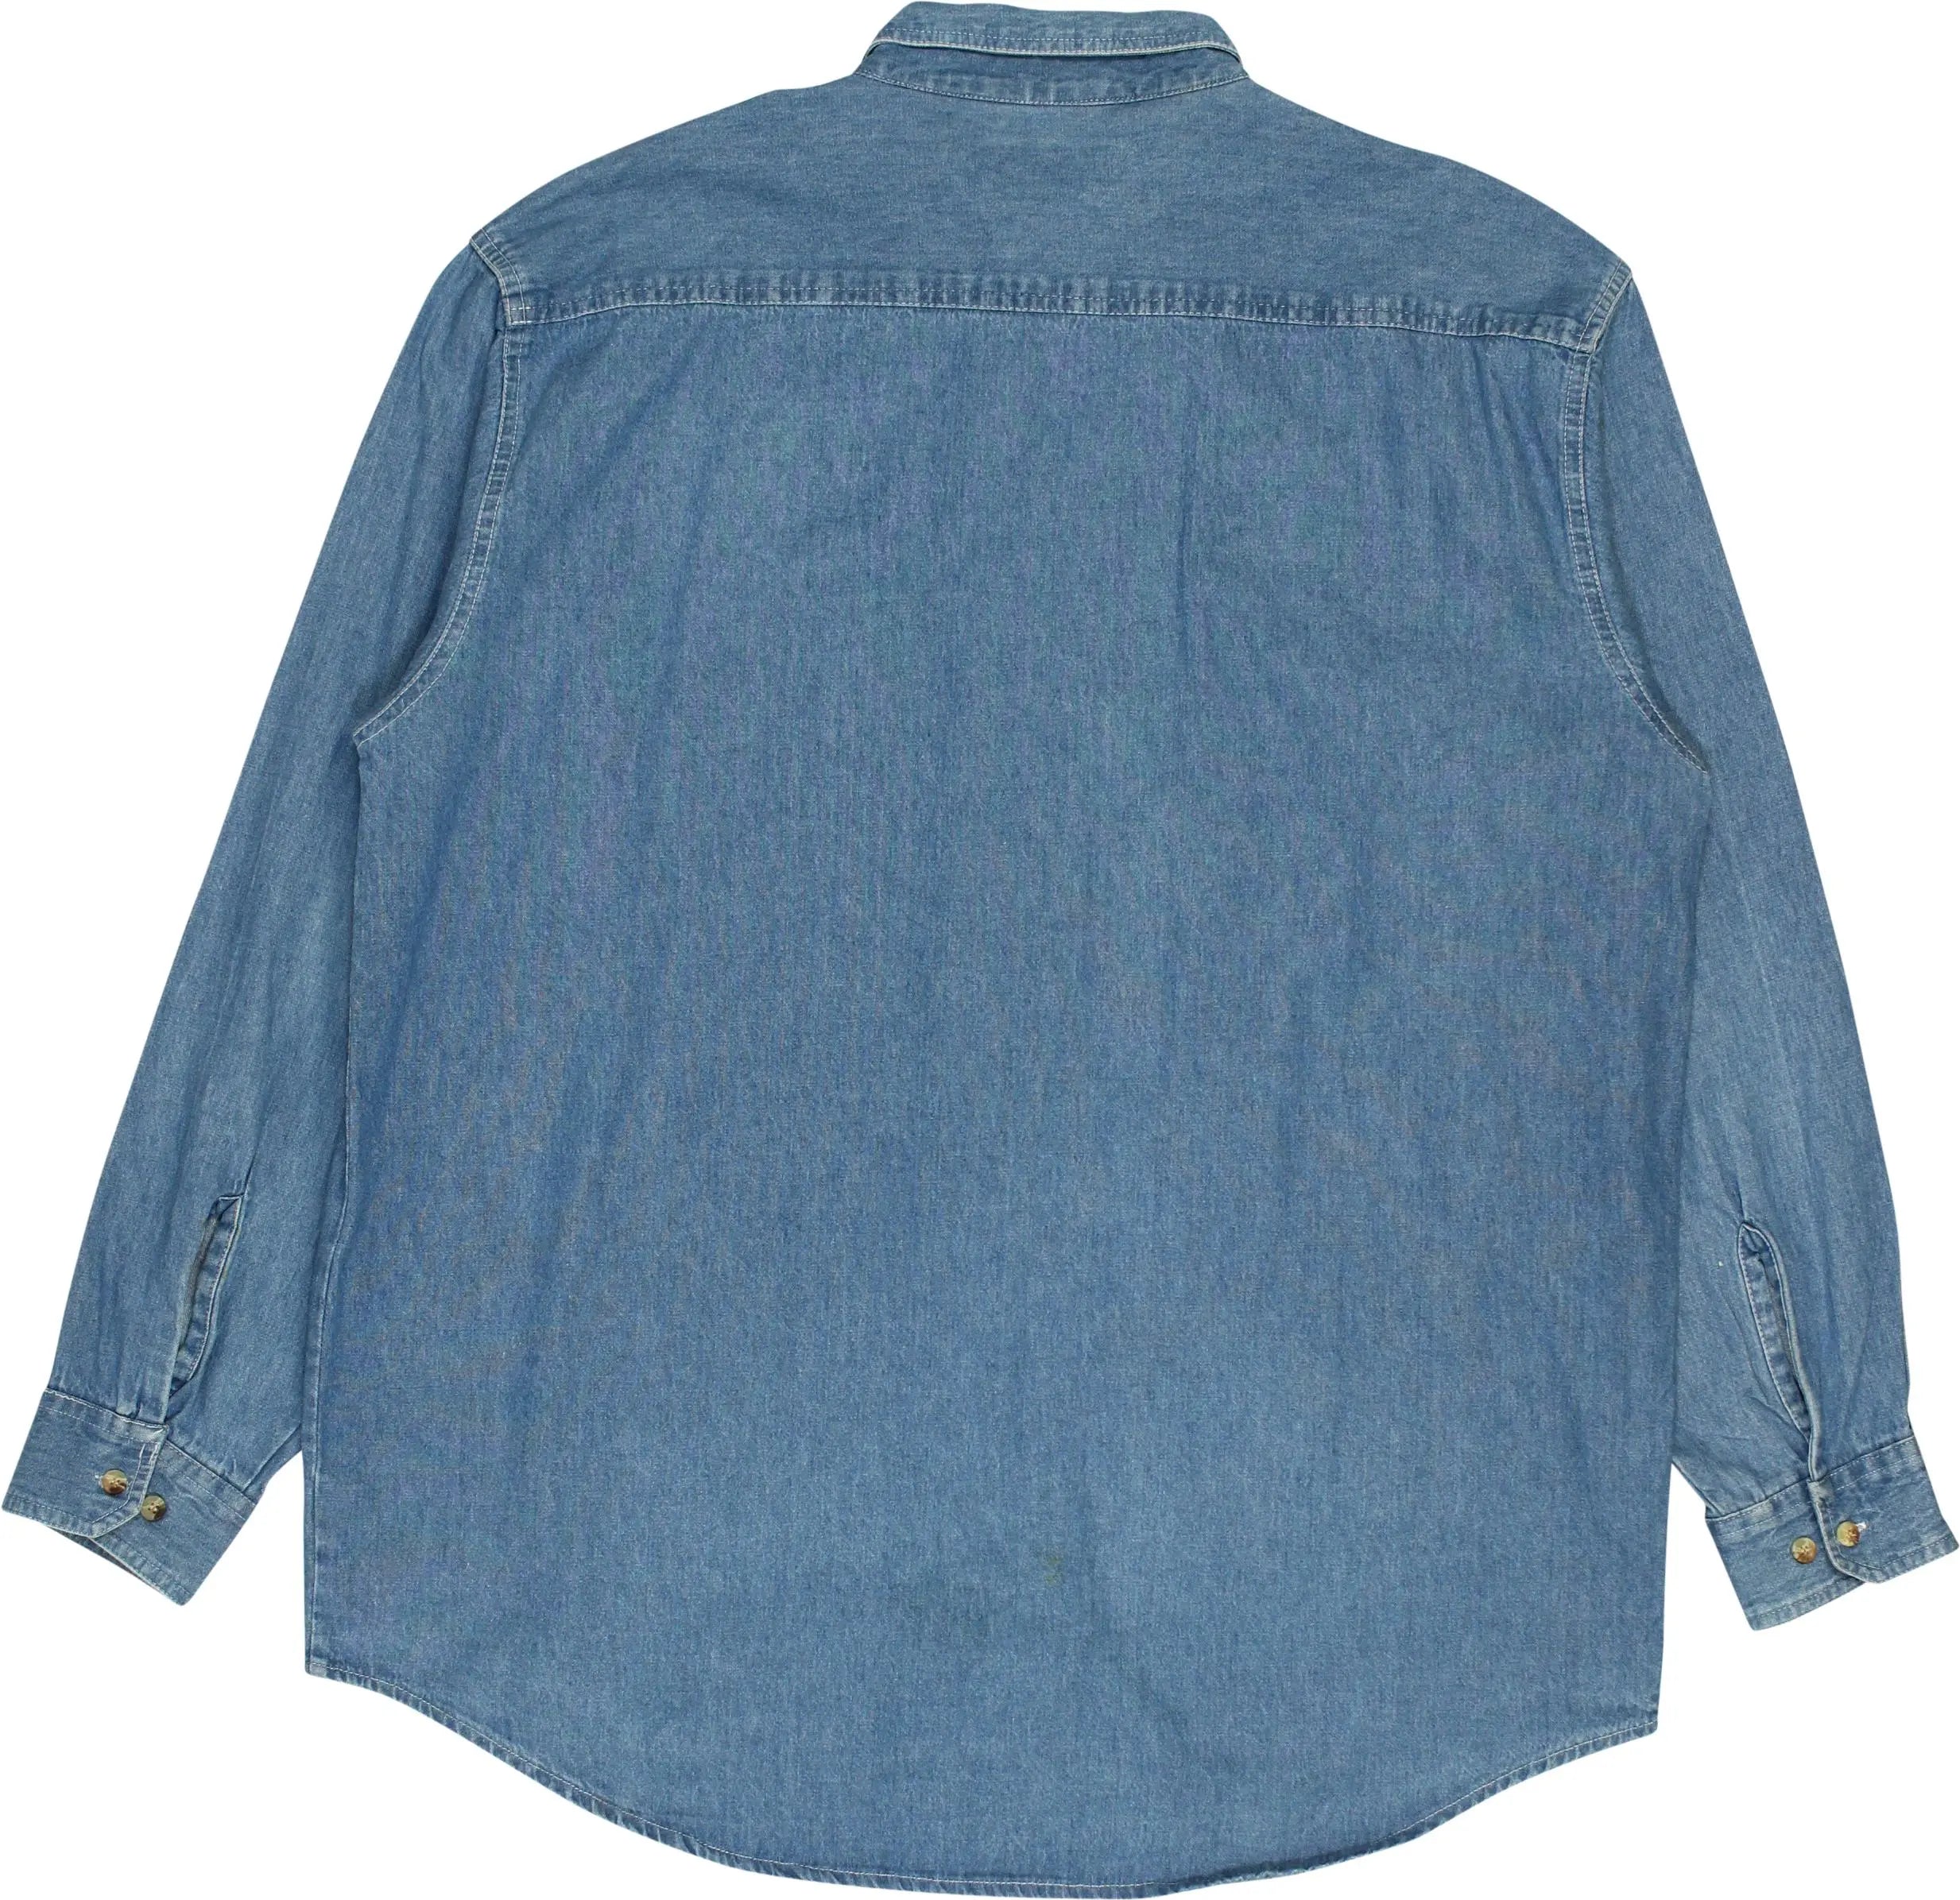 Luna Pier - Denim Shirt- ThriftTale.com - Vintage and second handclothing